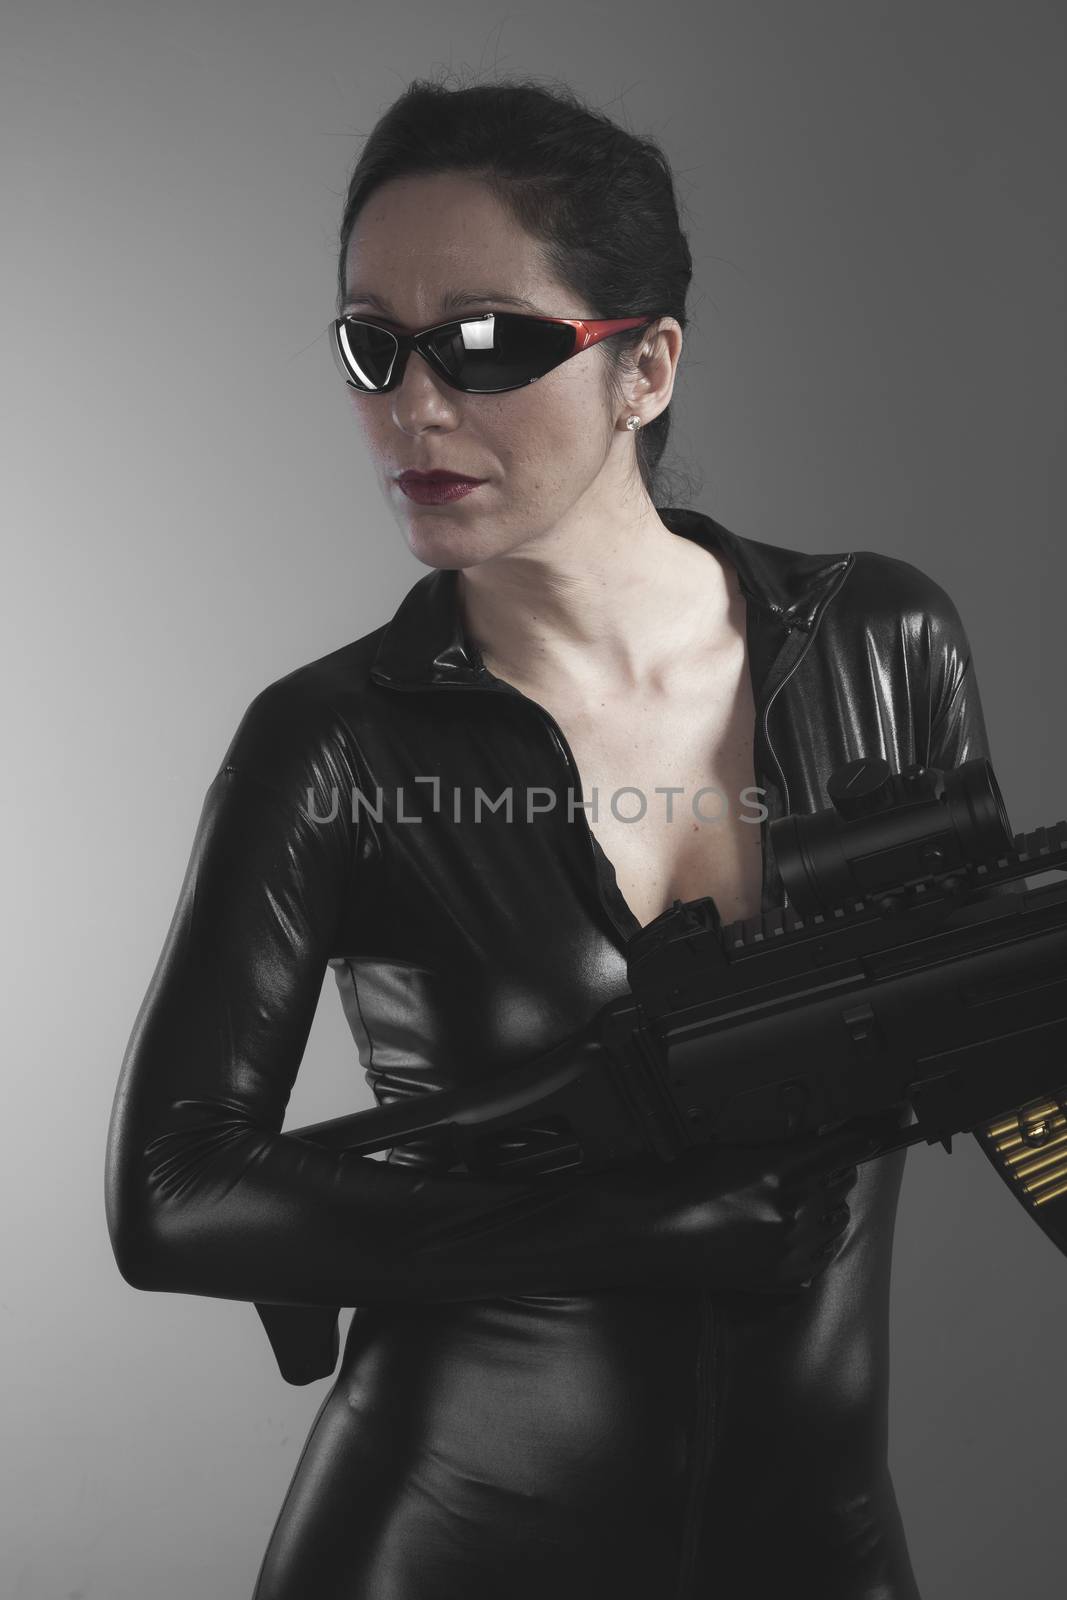 Kill, Brunette woman with enormous bulletproof vest and gun